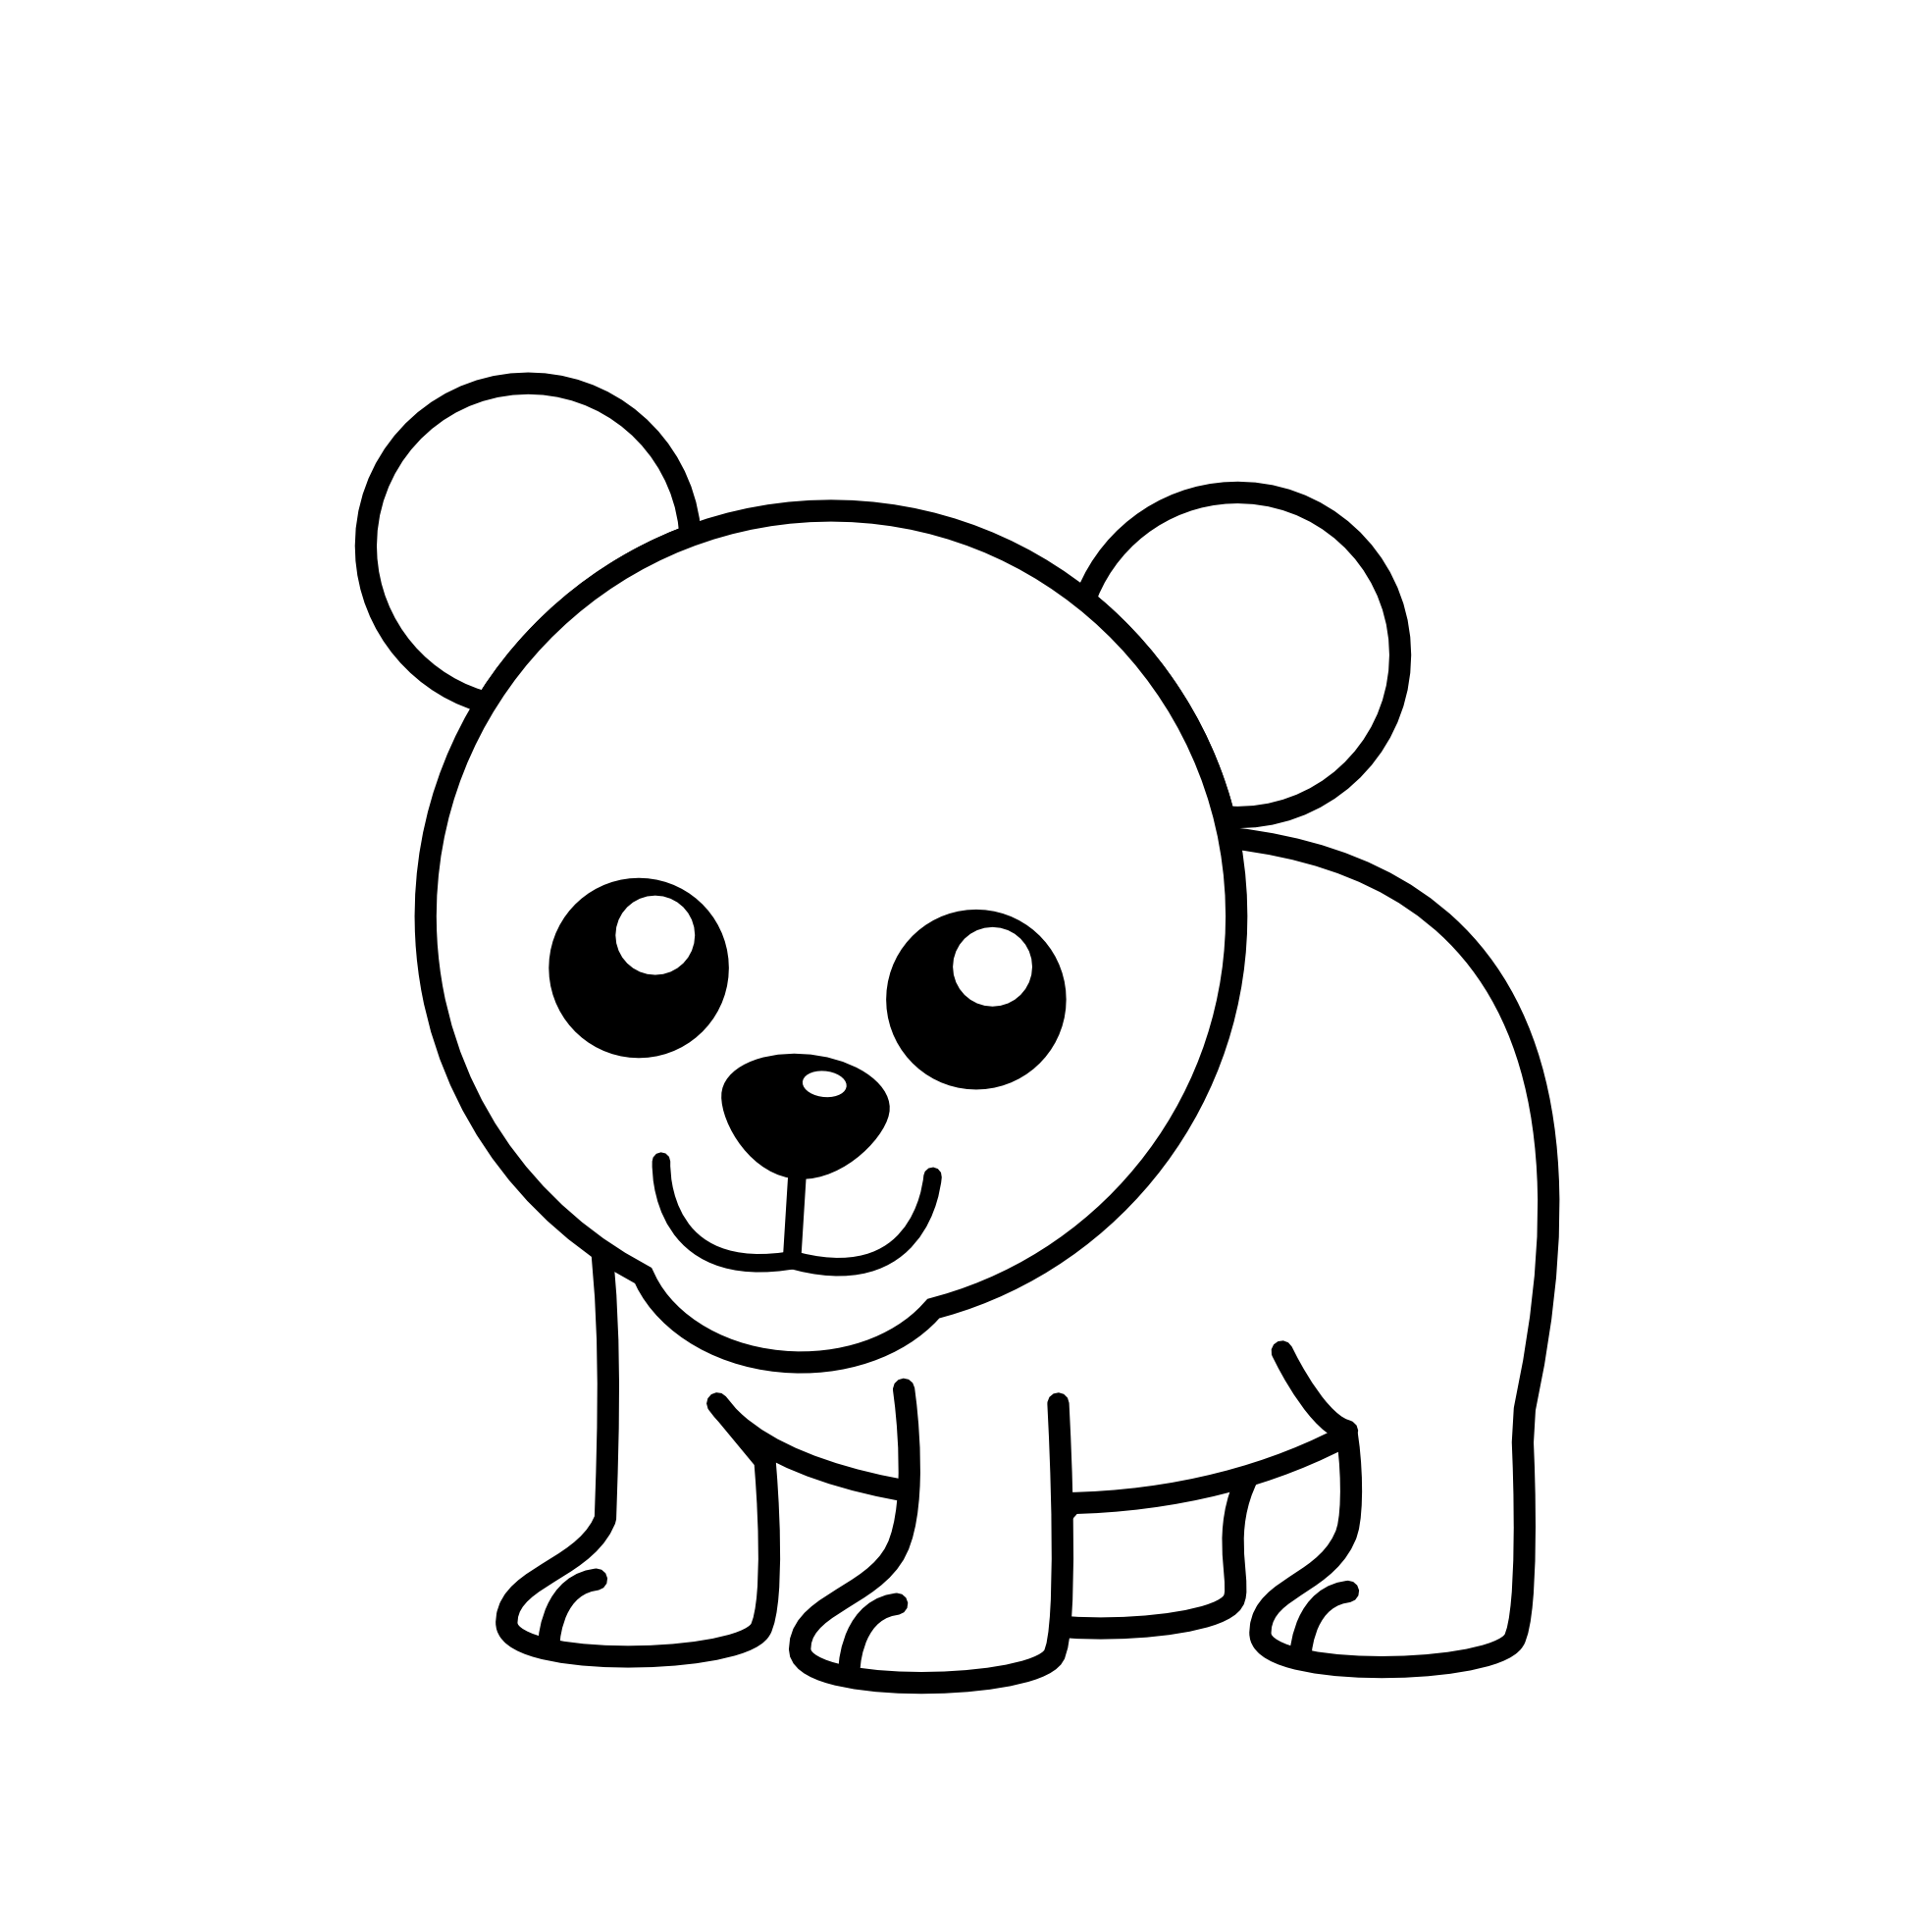 panda clipart black and white - photo #39